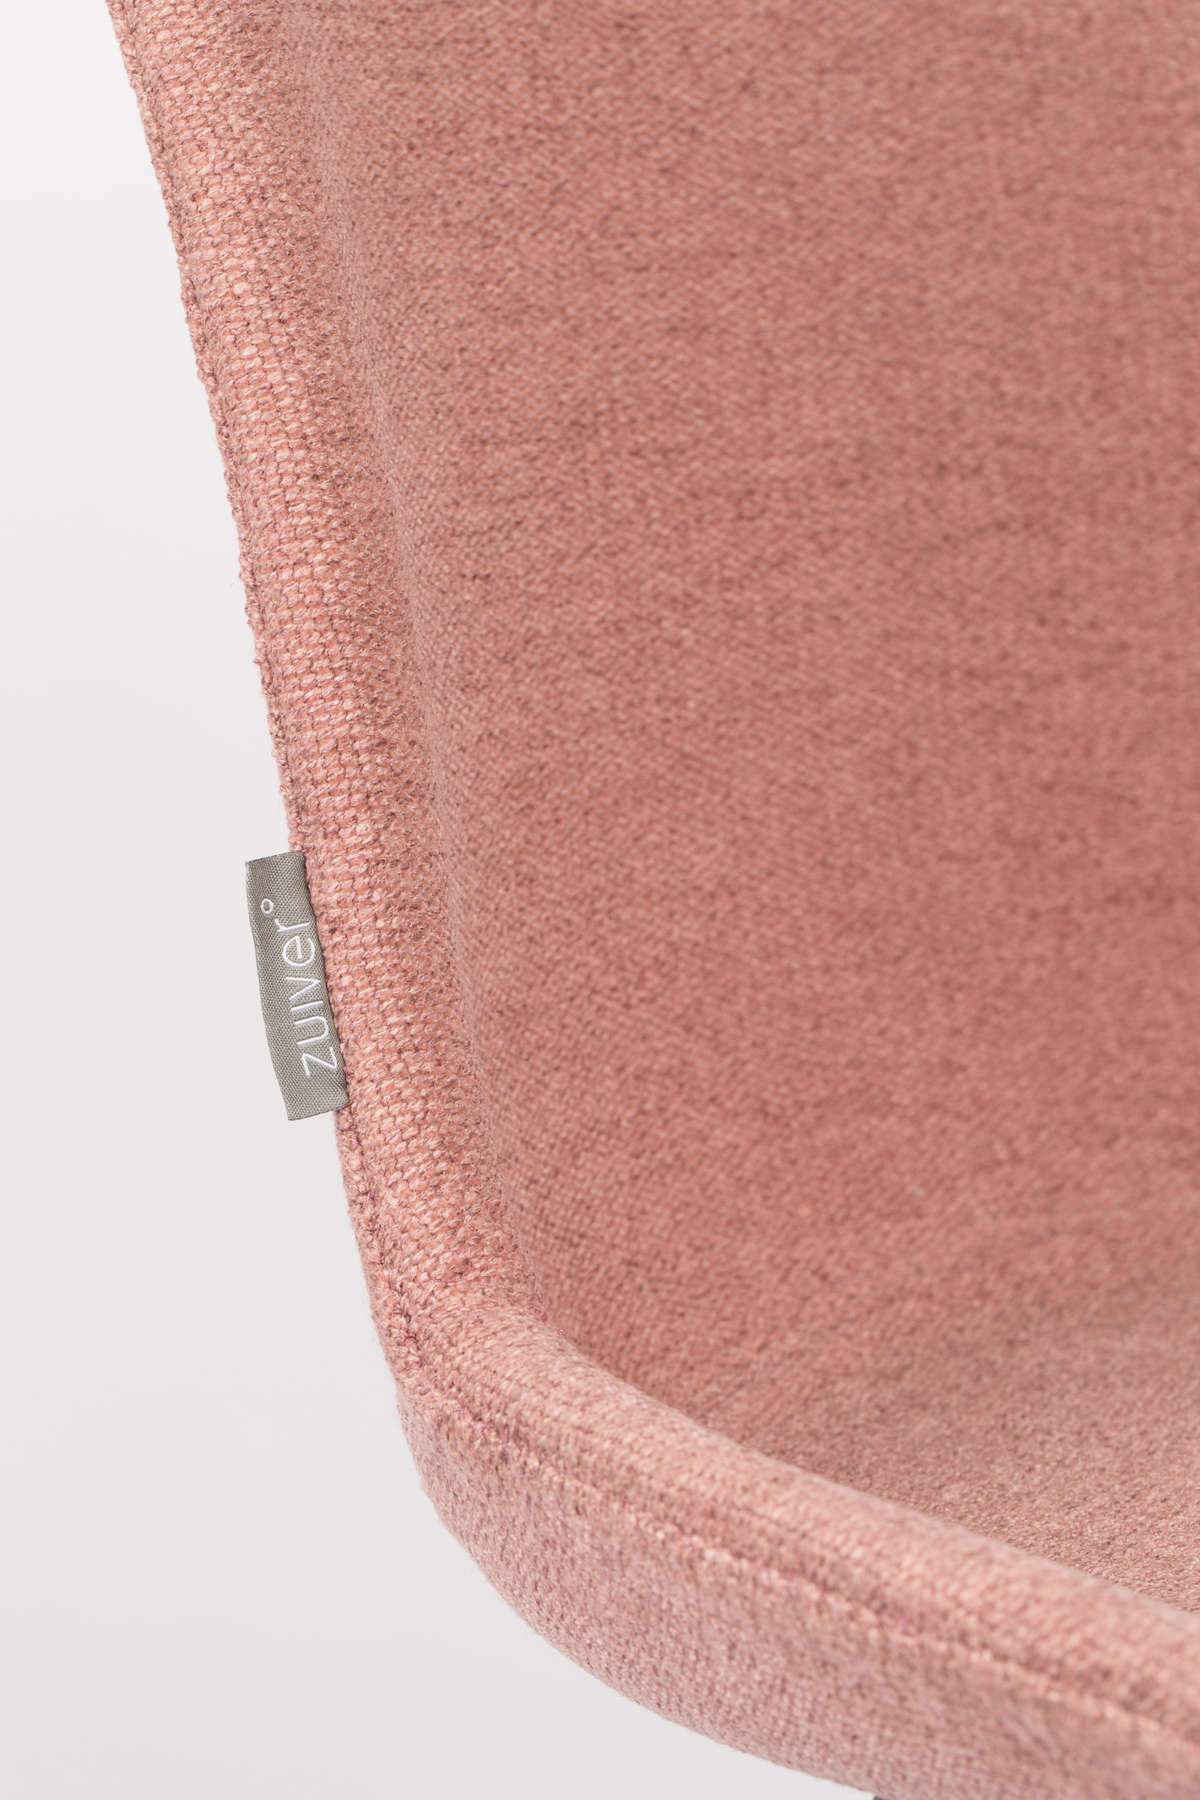 ALBERT KUIP SOFT chair pink, Zuiver, Eye on Design